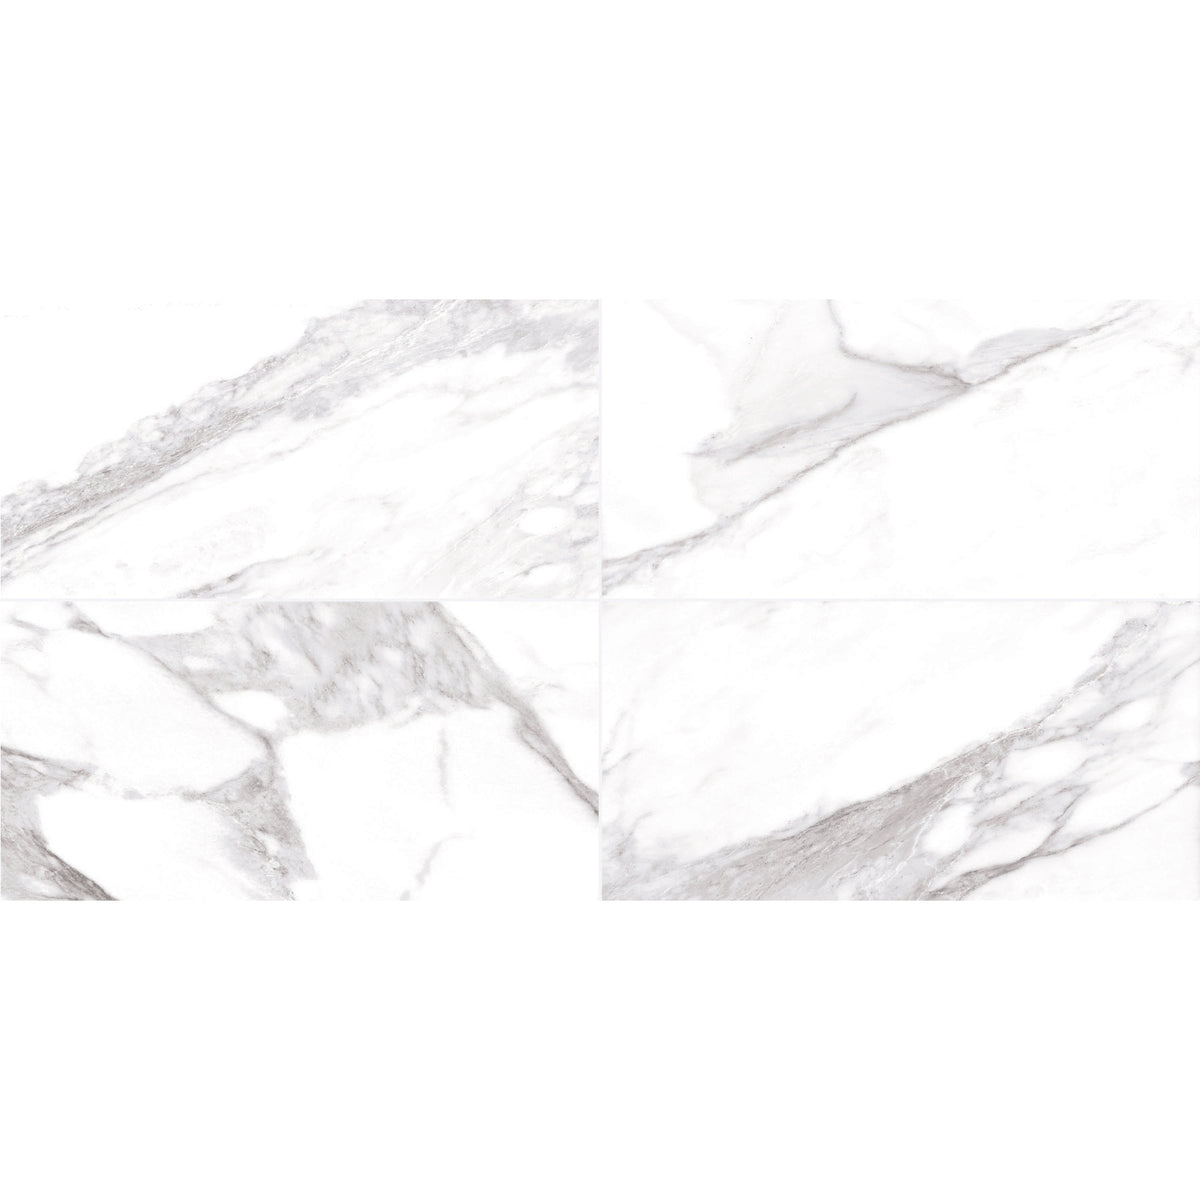 Daltile - Perpetuo - 12 in. x 24 in. Glazed Ceramic Wall Tile - Brilliant White Variation